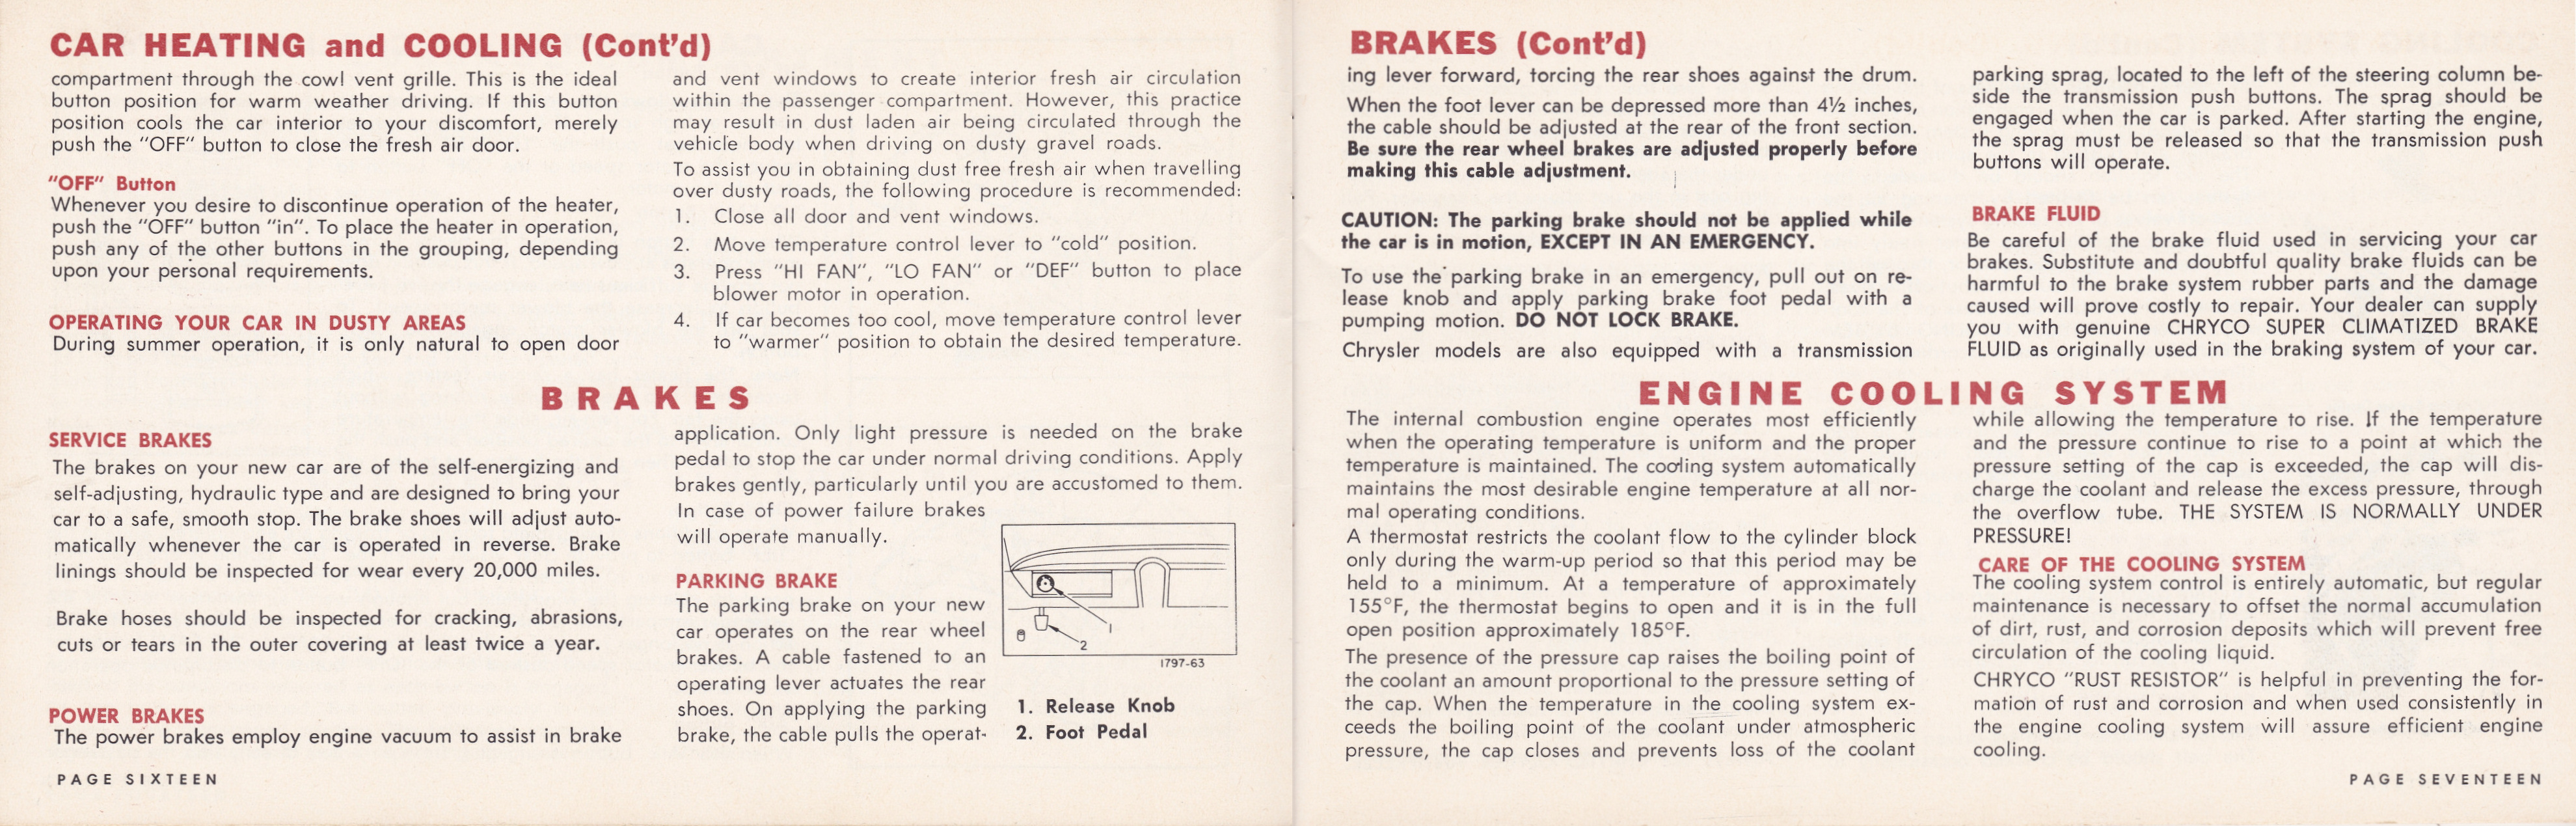 1964_Chrysler_Owners_Manual_Cdn-16-17